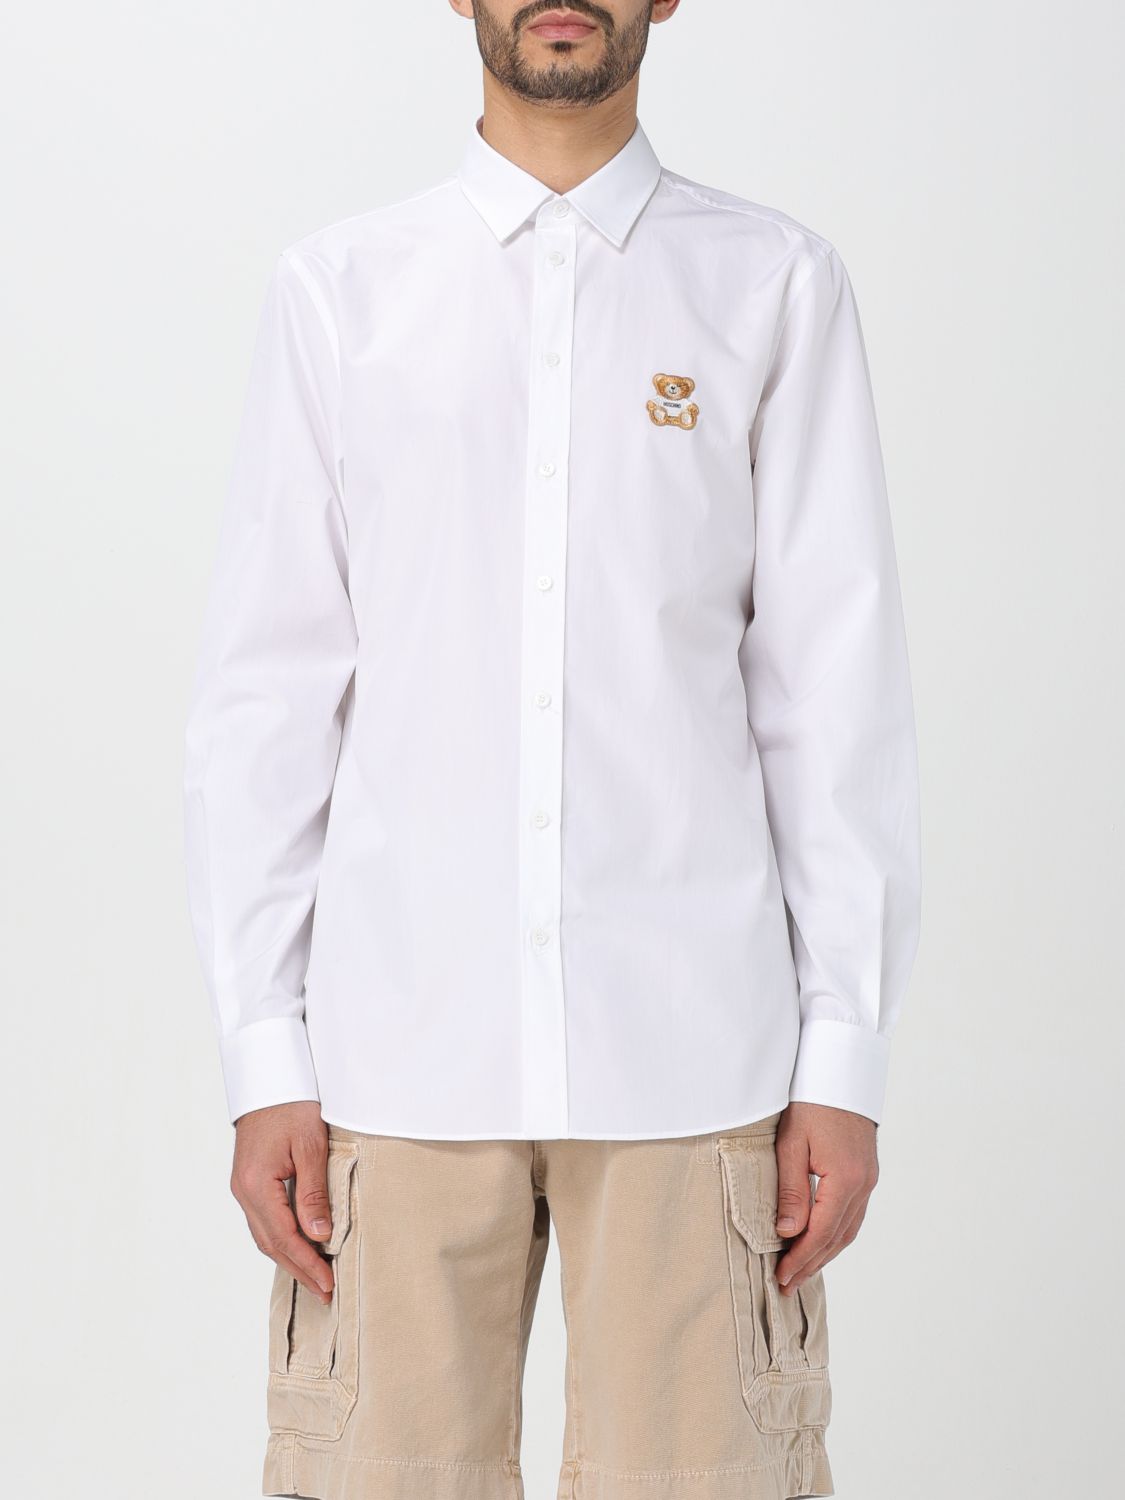 Moschino Couture Shirt  Men Color White